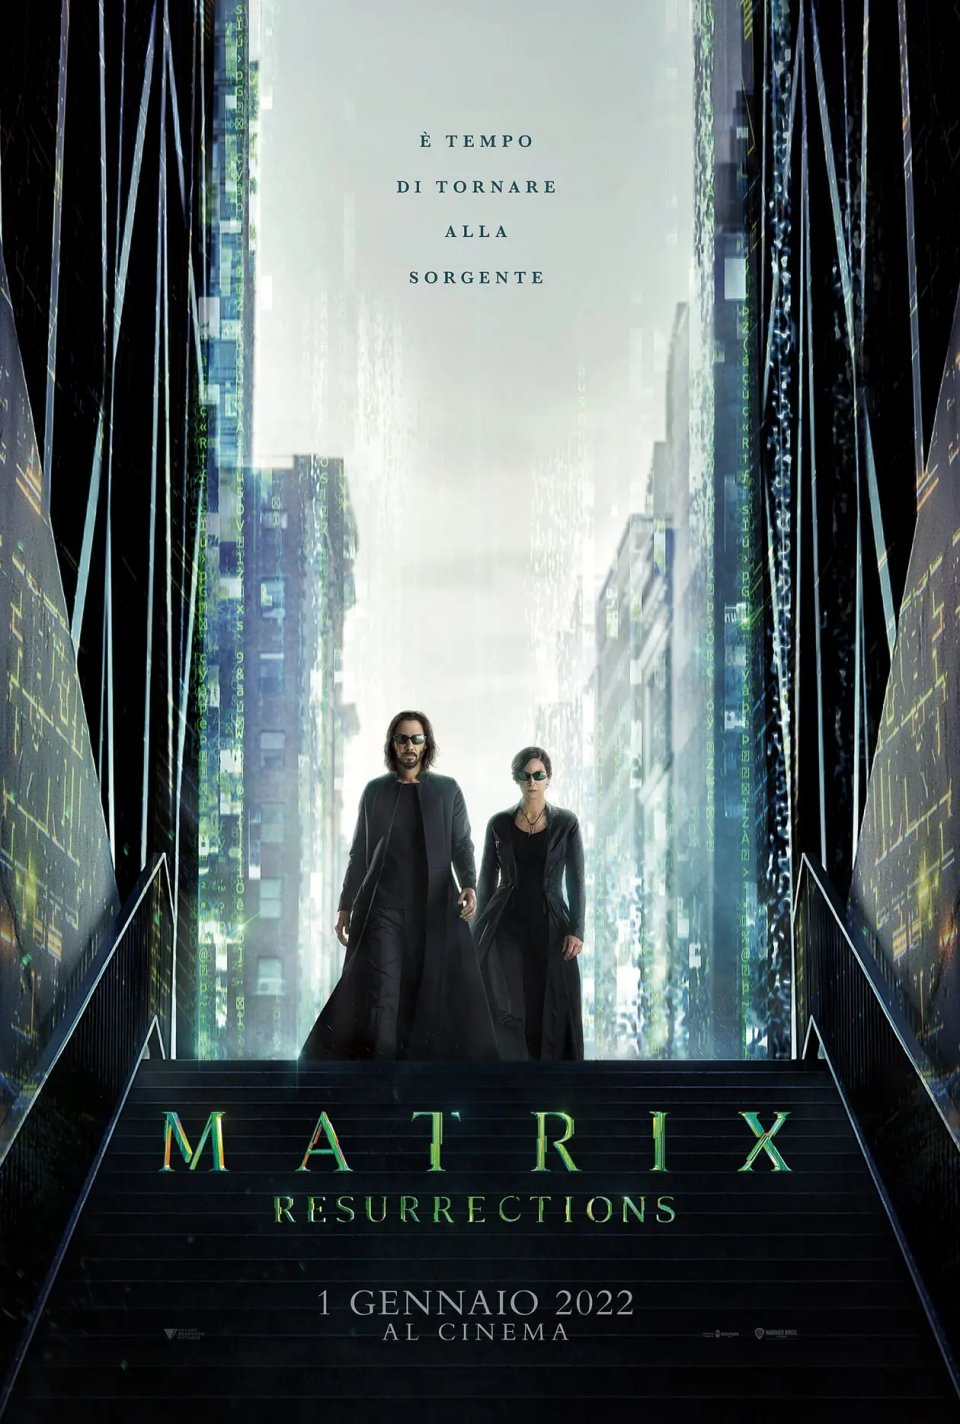 matrix-resurrection-poster-ita_jpg_960x0_crop_q85.jpg